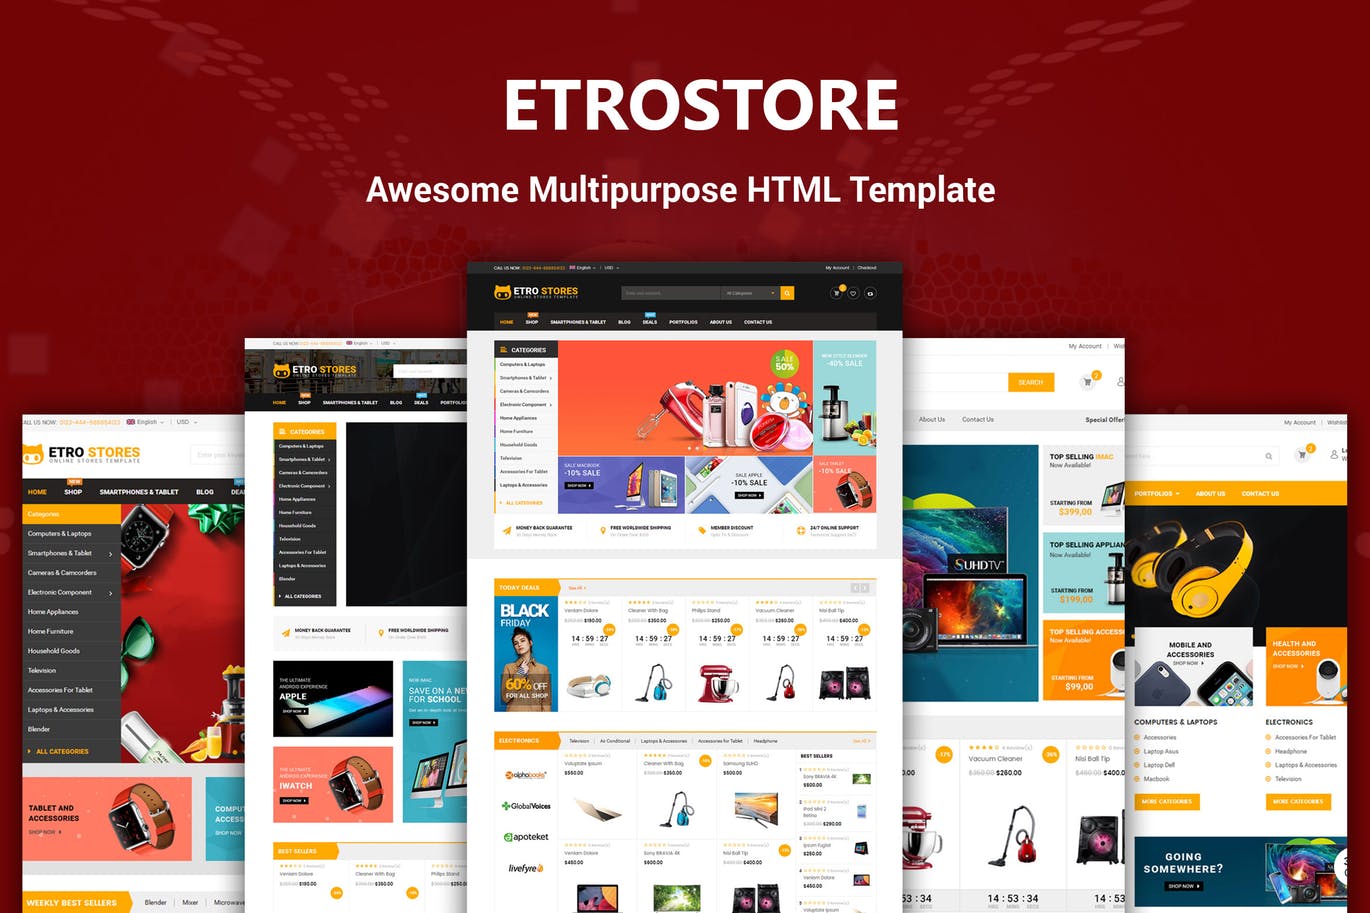 Bootstrap架构响应式多用途网上商城HTML5模板素材库精选 EtroStore – Responsive Multi-Purpose HTML Template插图